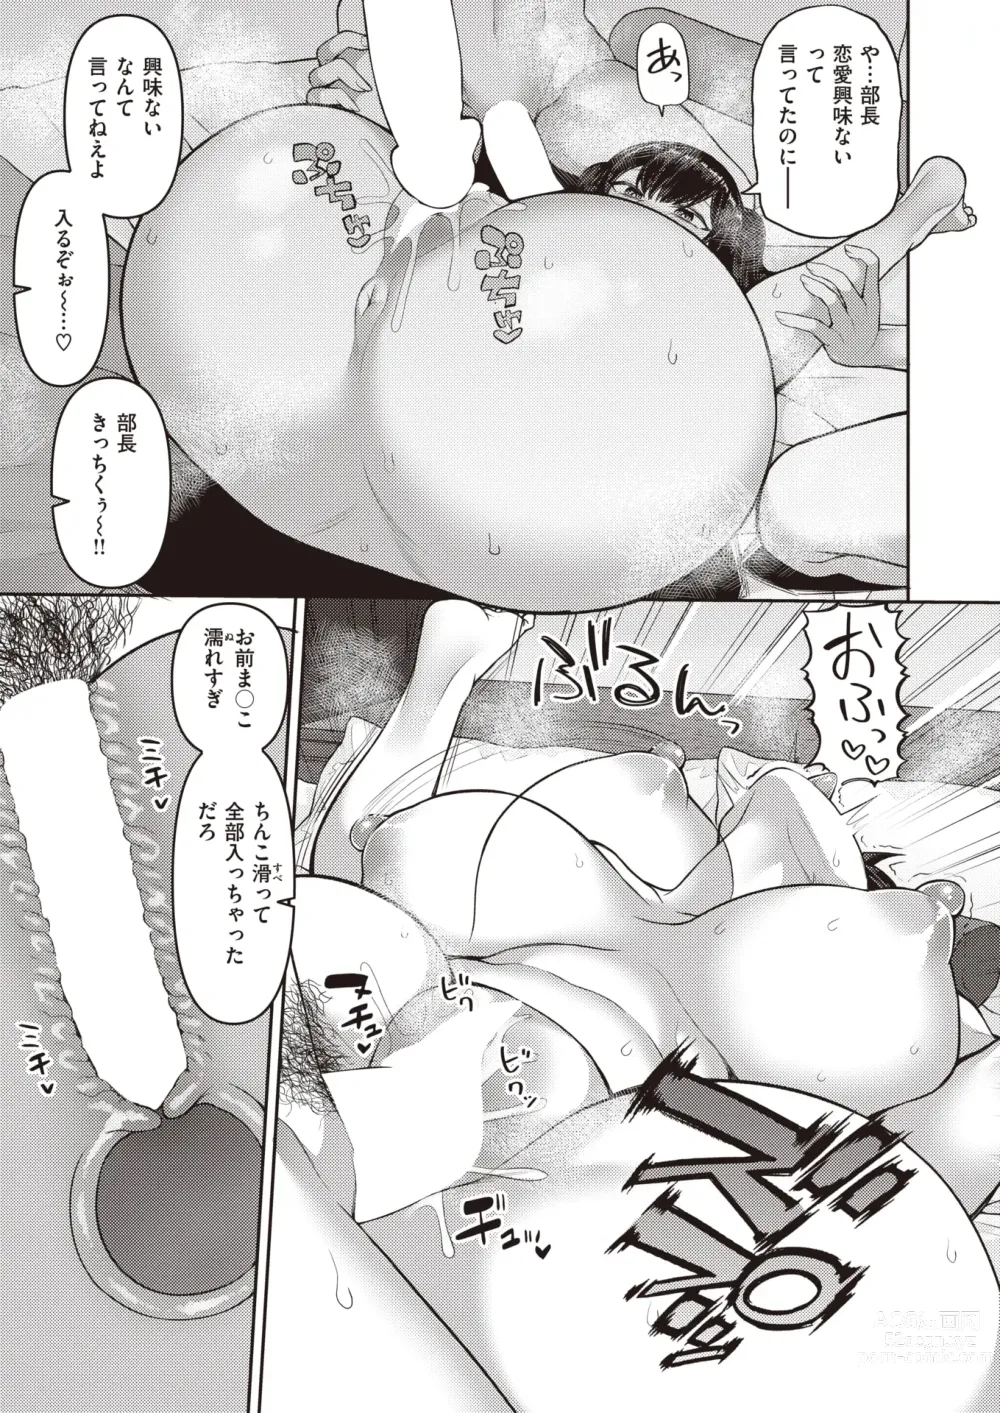 Page 13 of manga オタクちょろいわ